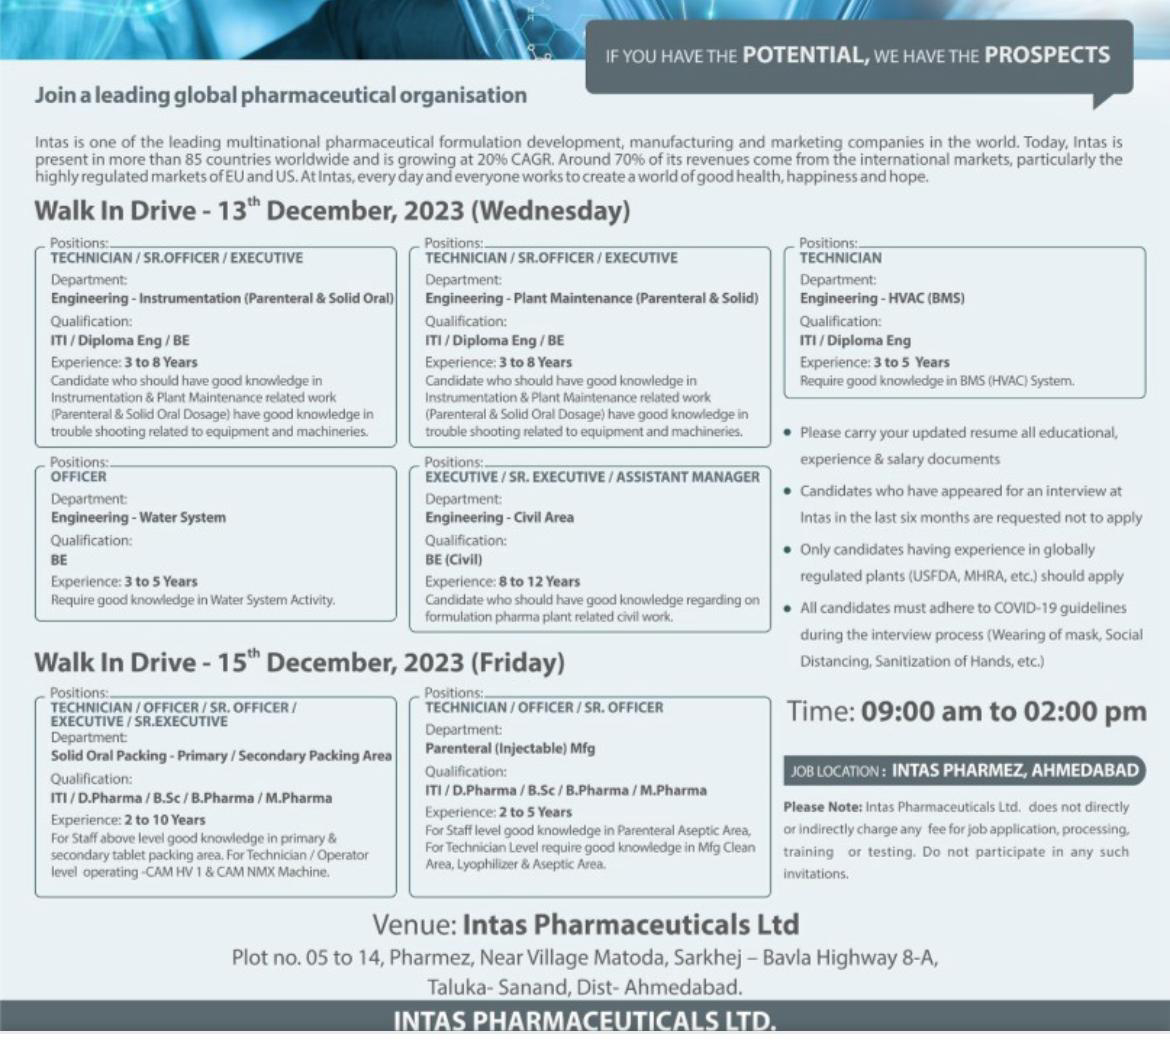 Job Availables Intas Pharmaceuticals Ltd Walk In Interview for ITI/ D Pharma/ BSc/ B Pharm/ M Pharm/ BE/ Diploma Engineering